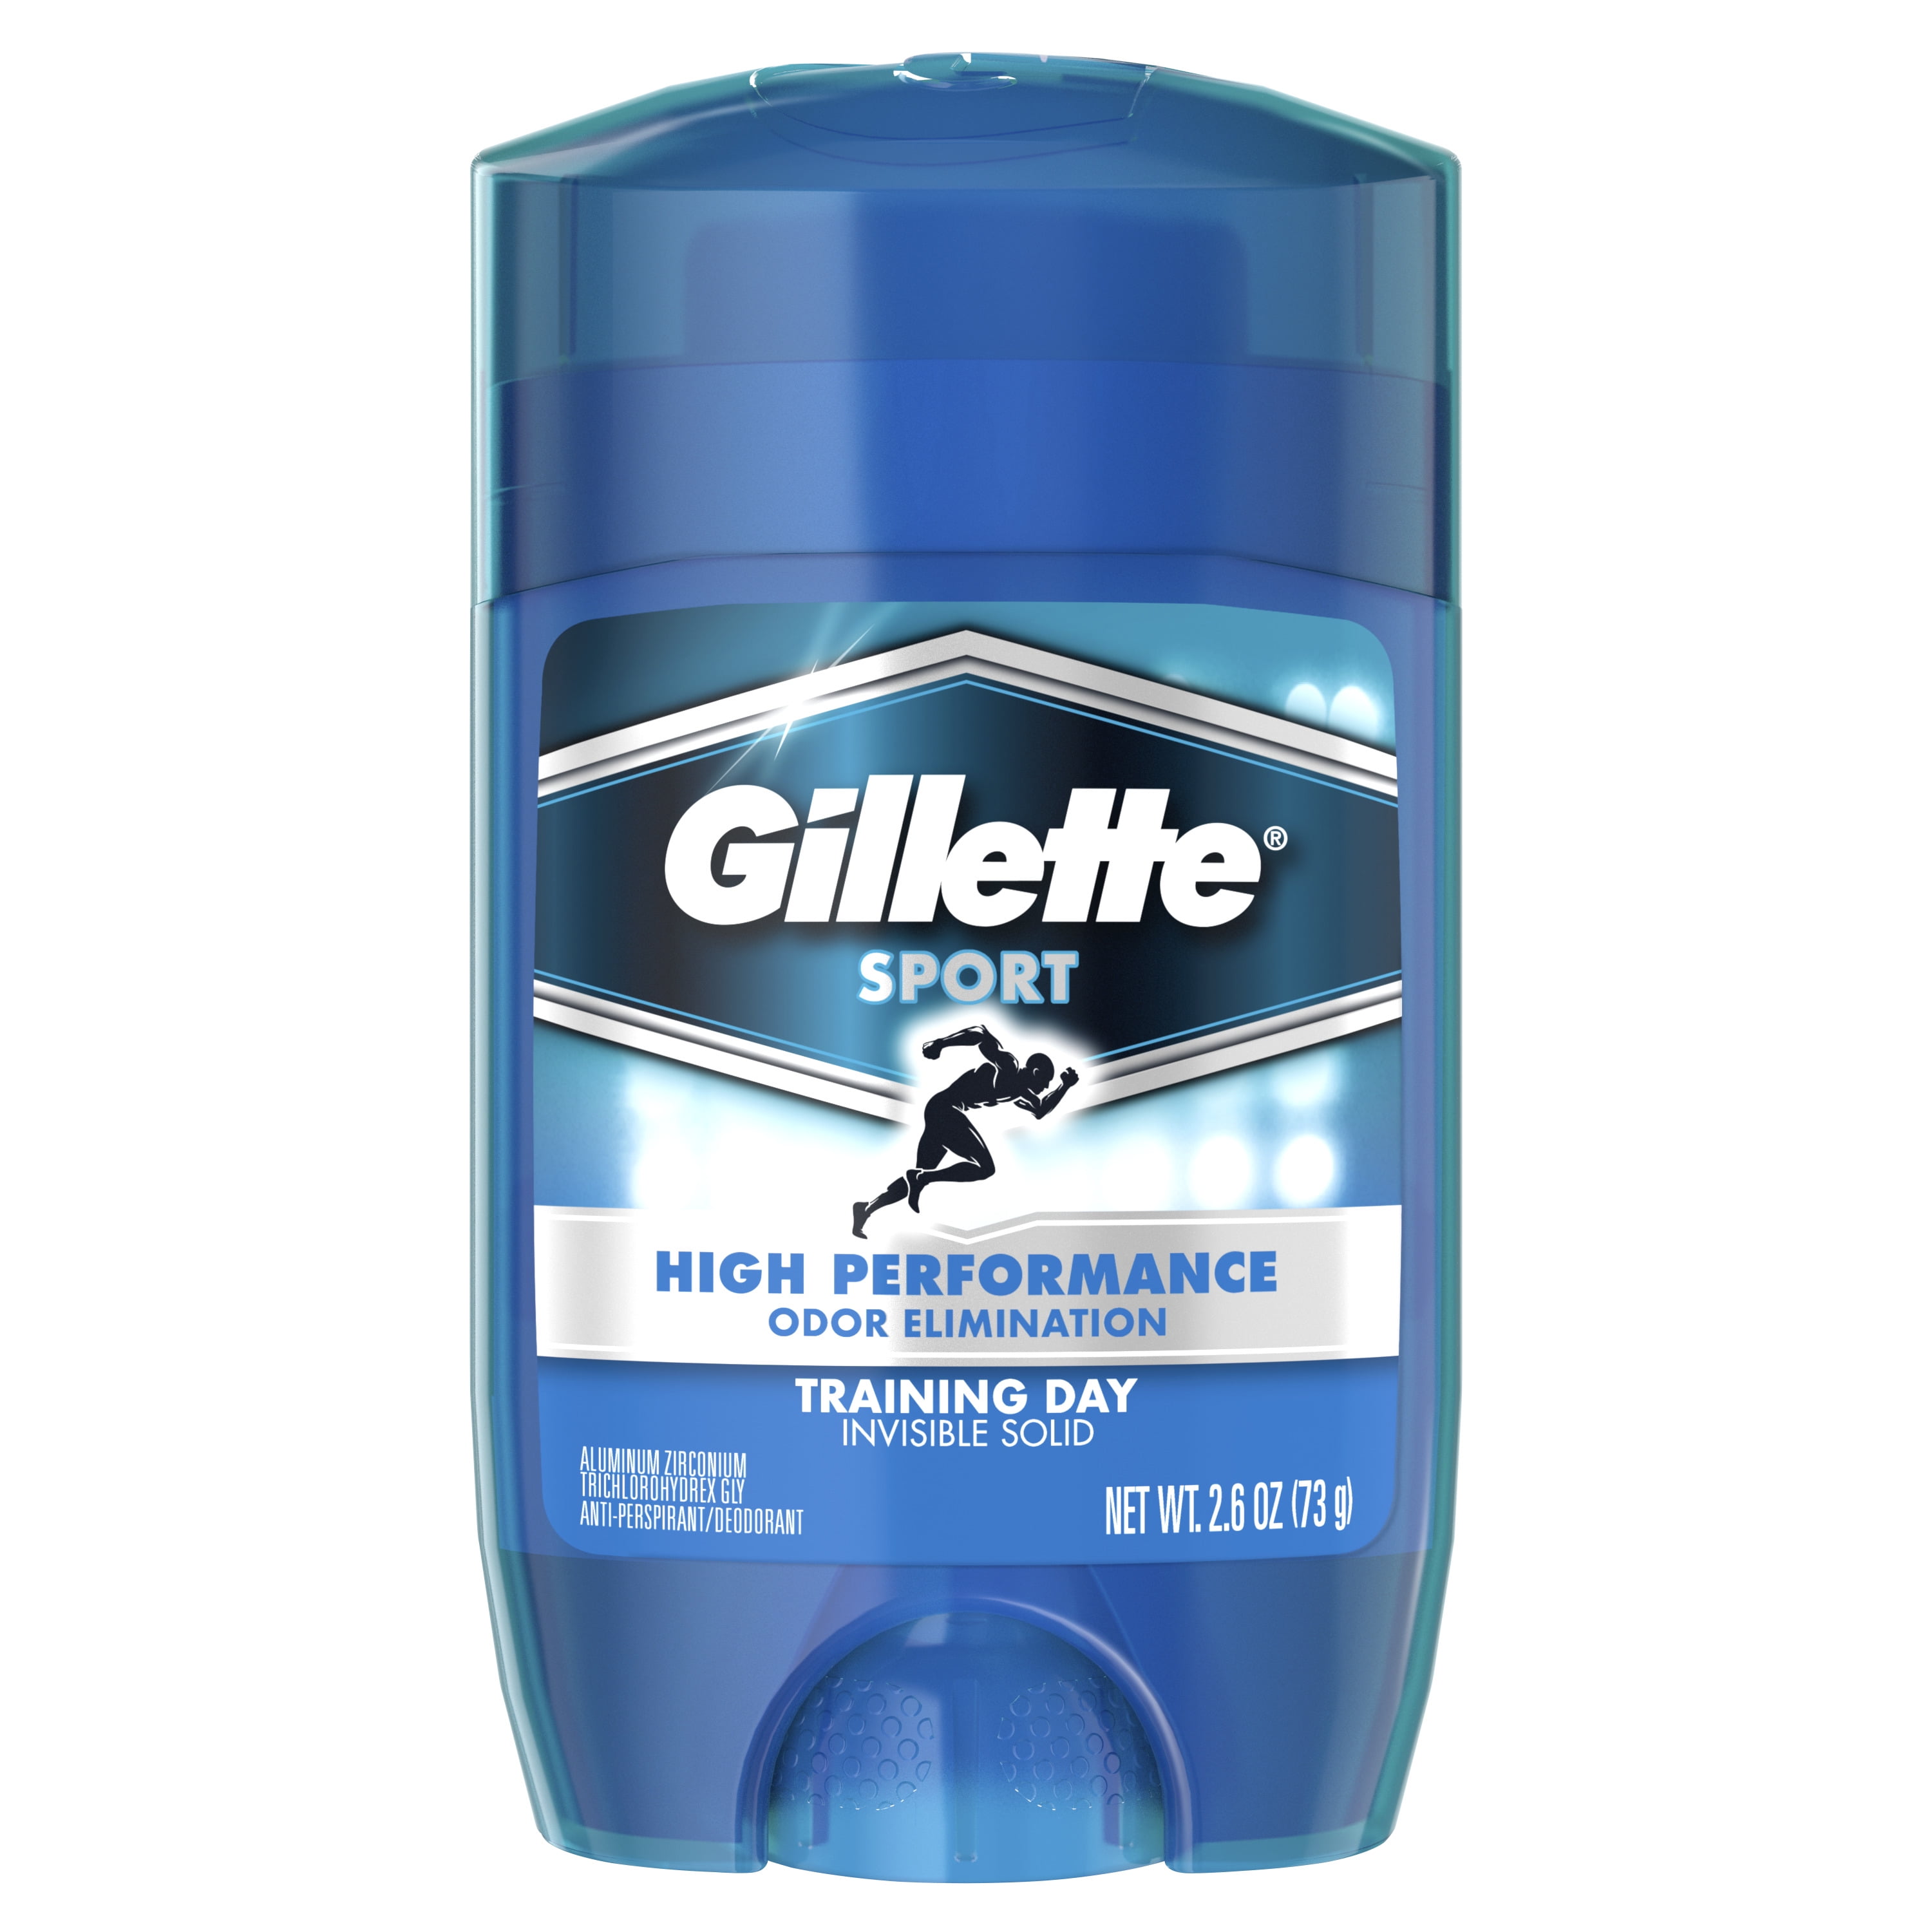 travel size gillette deodorant